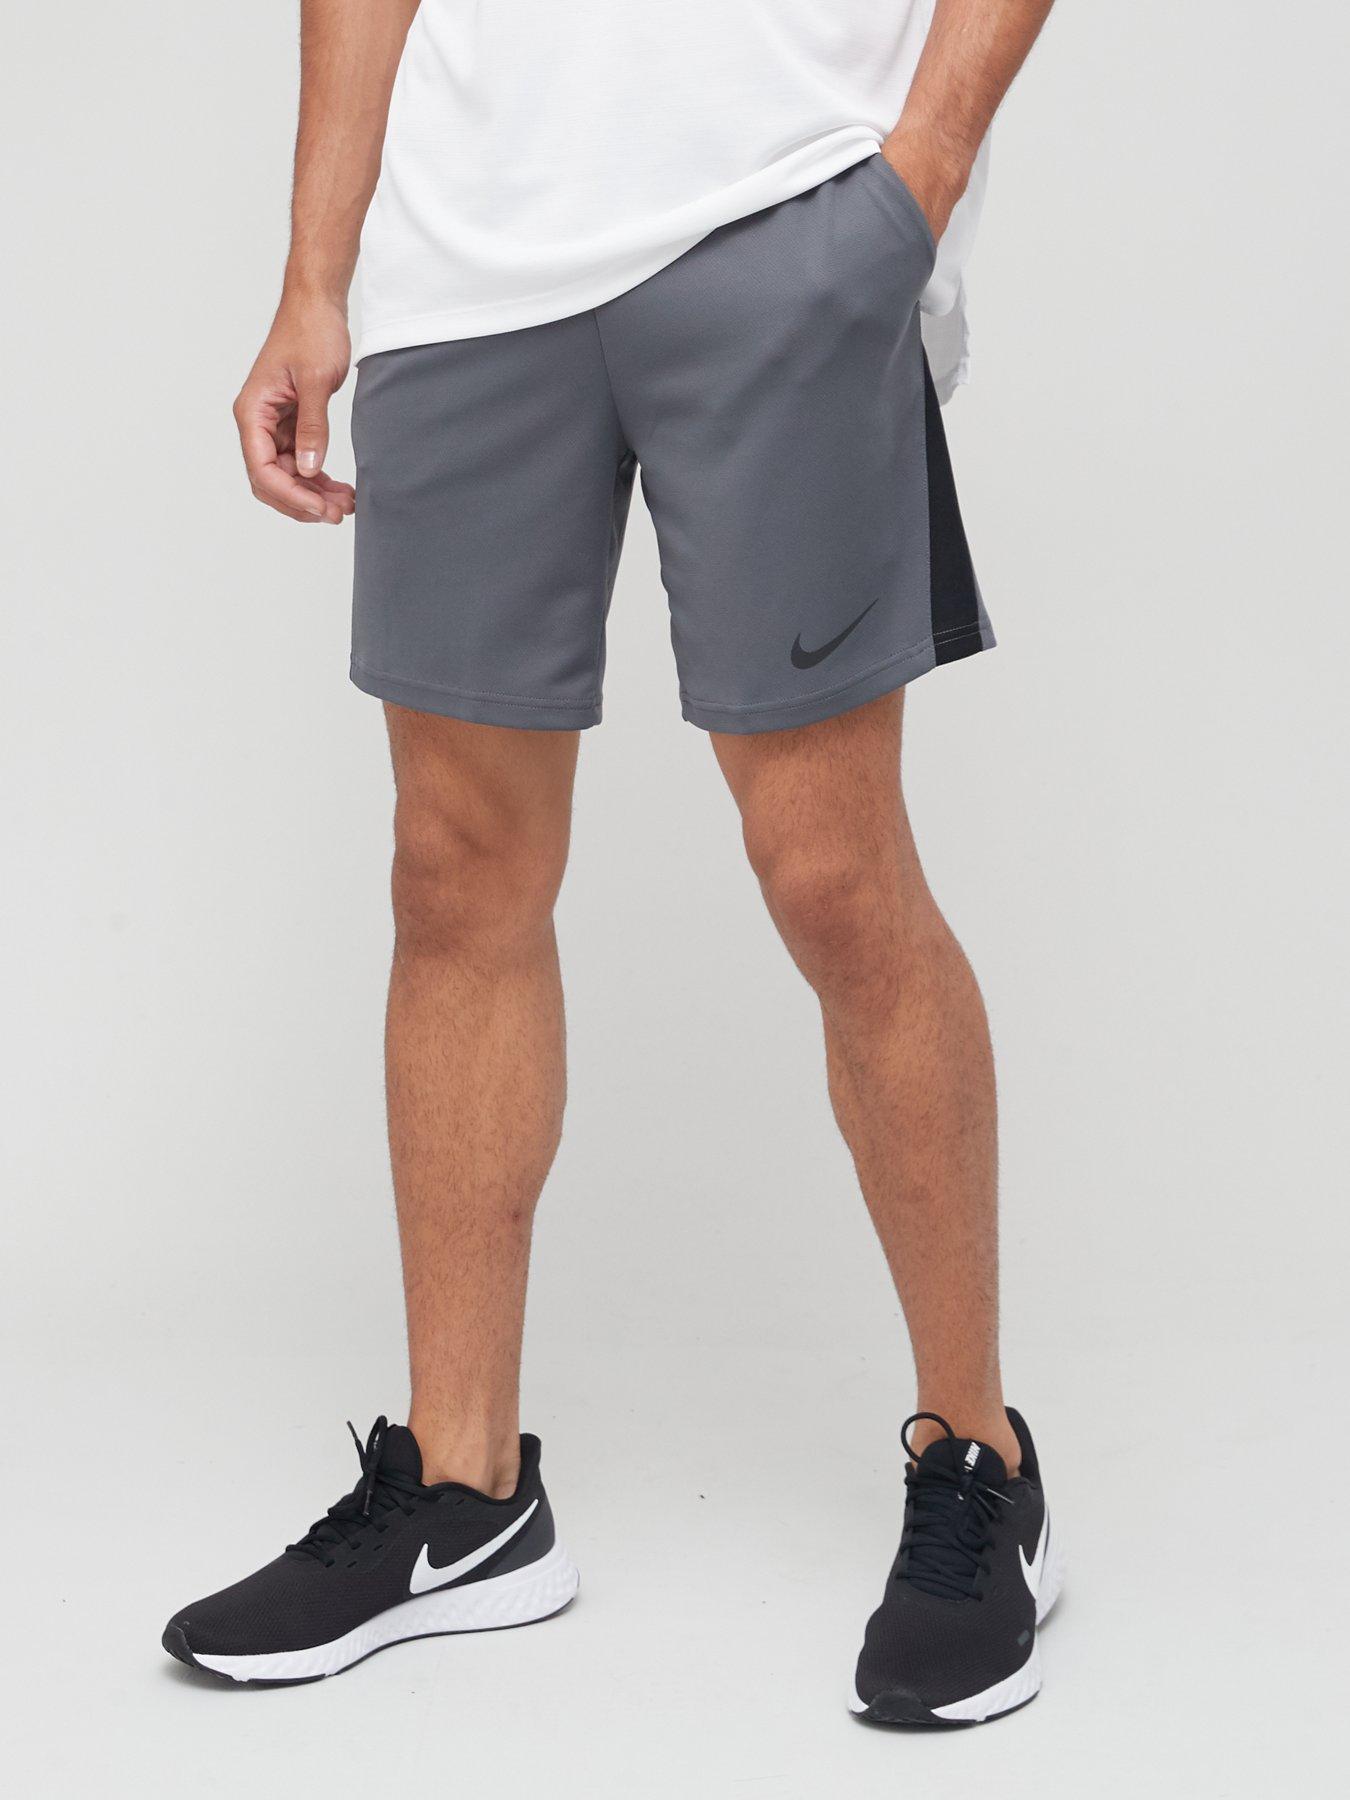  Nike Dry Short 5.0 - Grey/Black